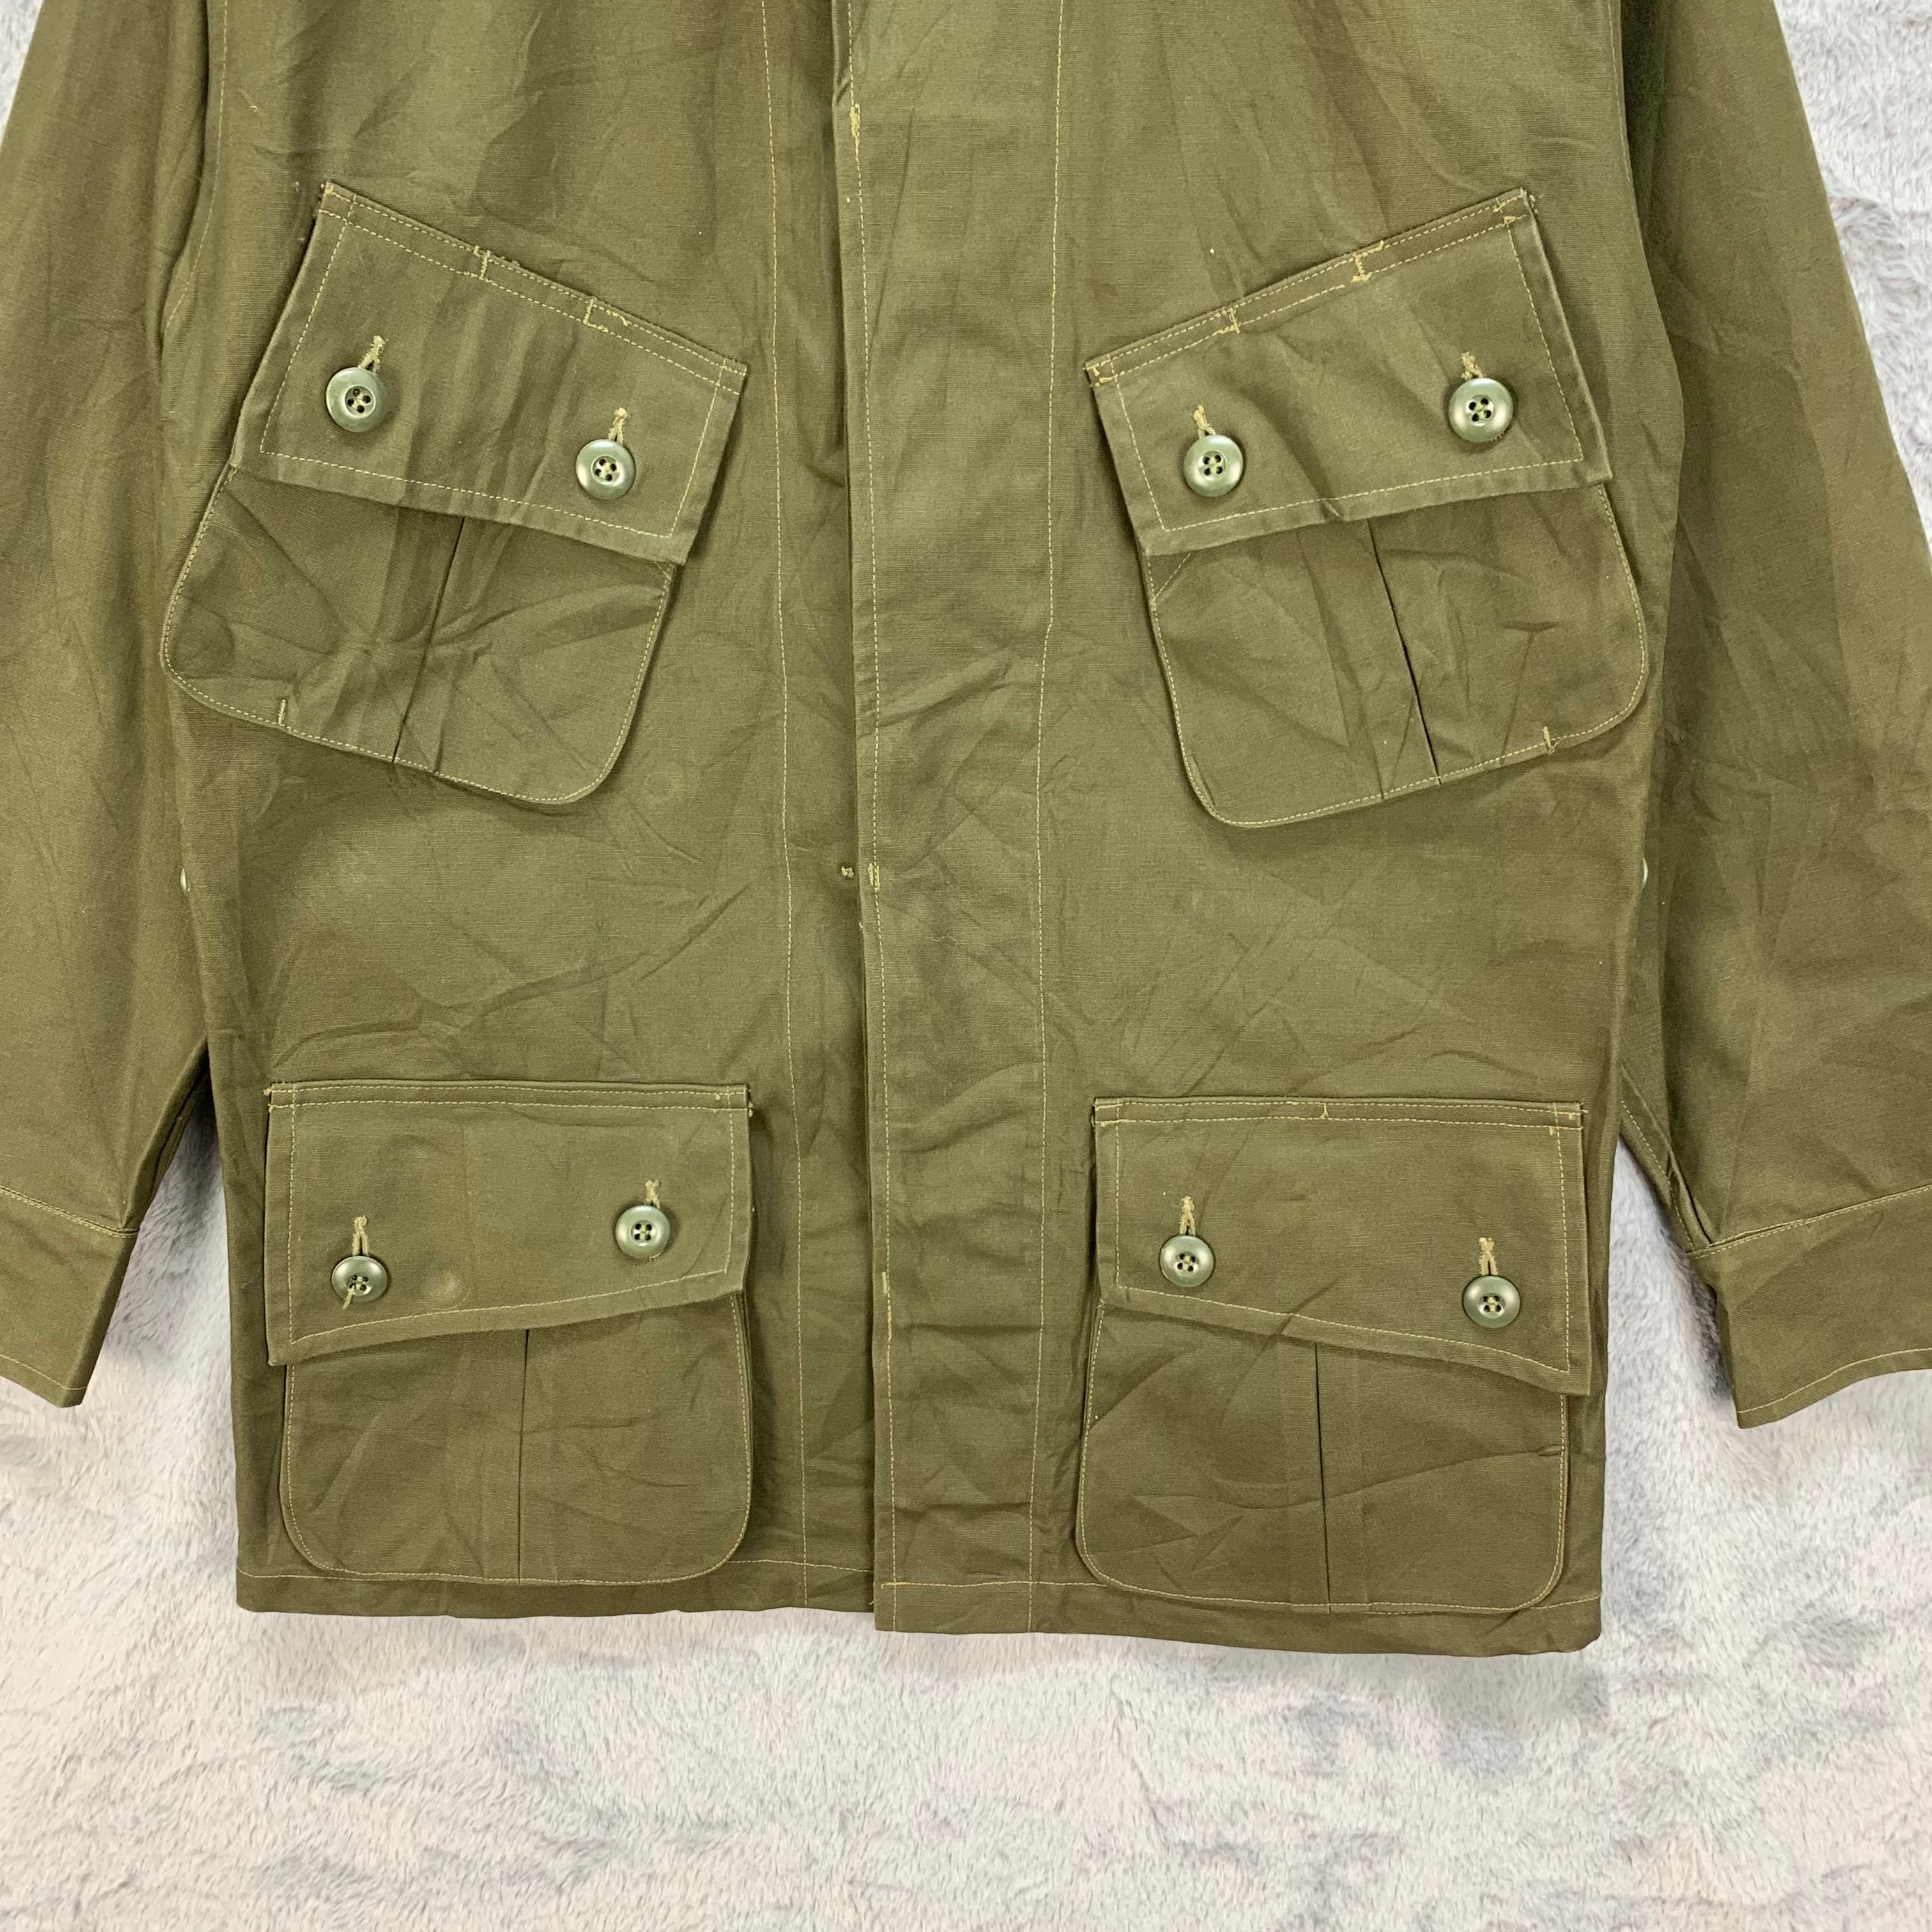 Vintage - Army Uniform Military Field Jacket / Chore Jacket #4400-152 - 3